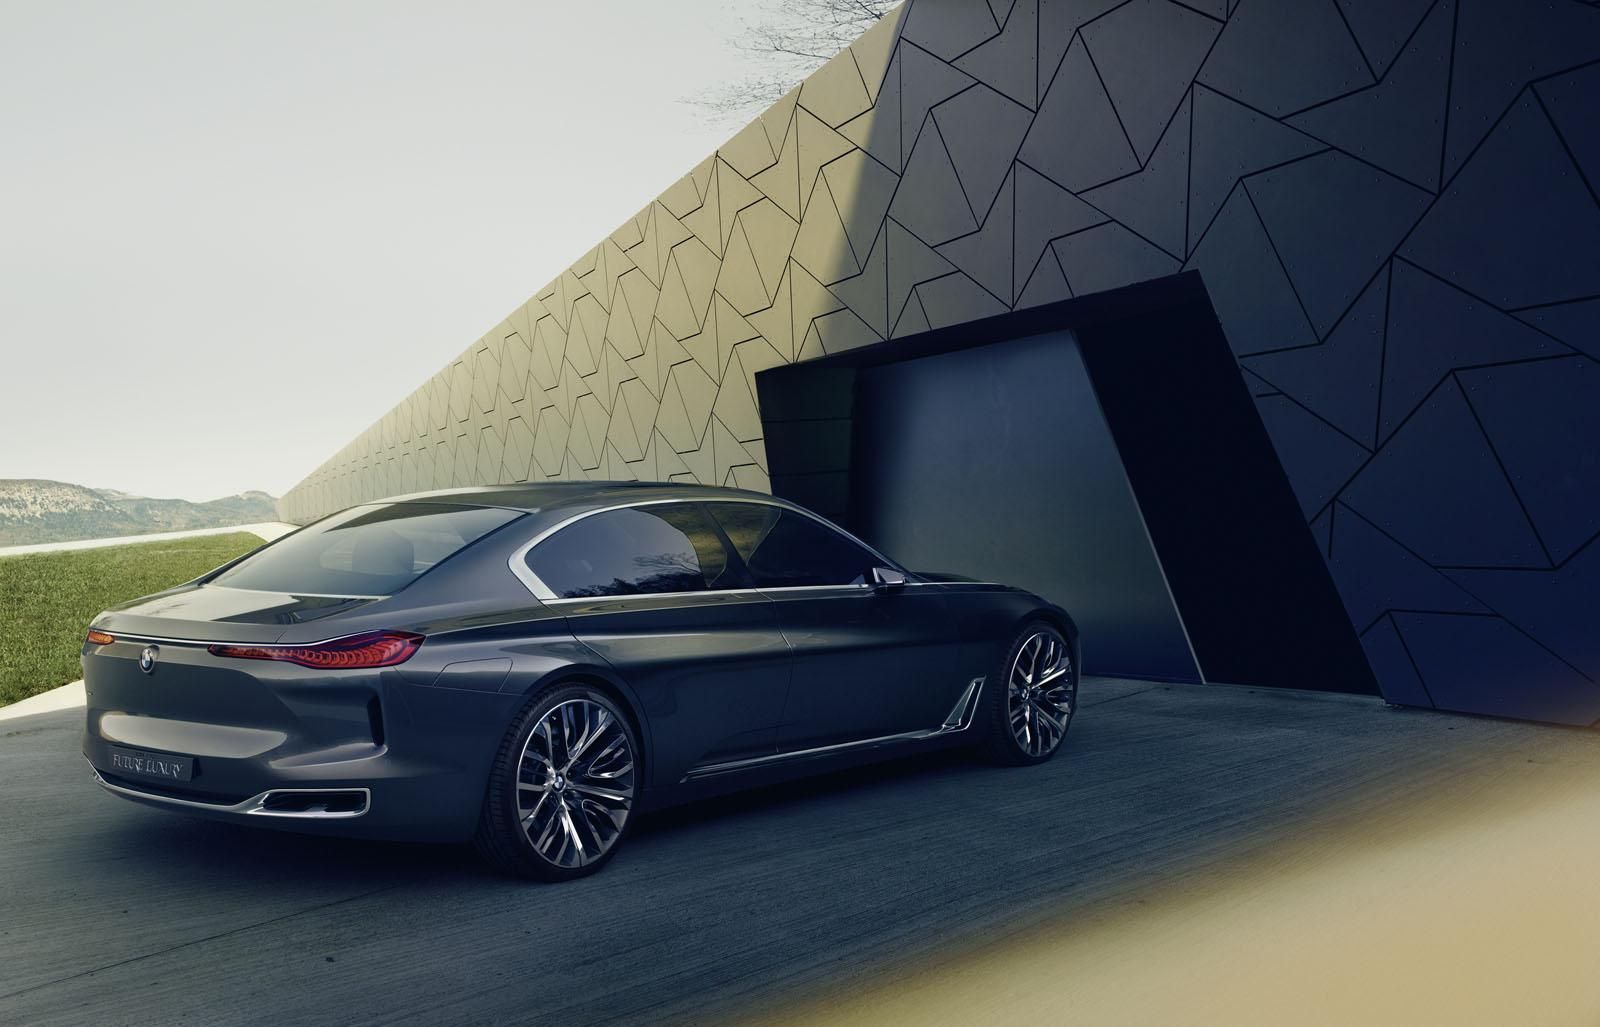 BMW VISION FUTURE LUXURY KONSEPT RESM GALERS